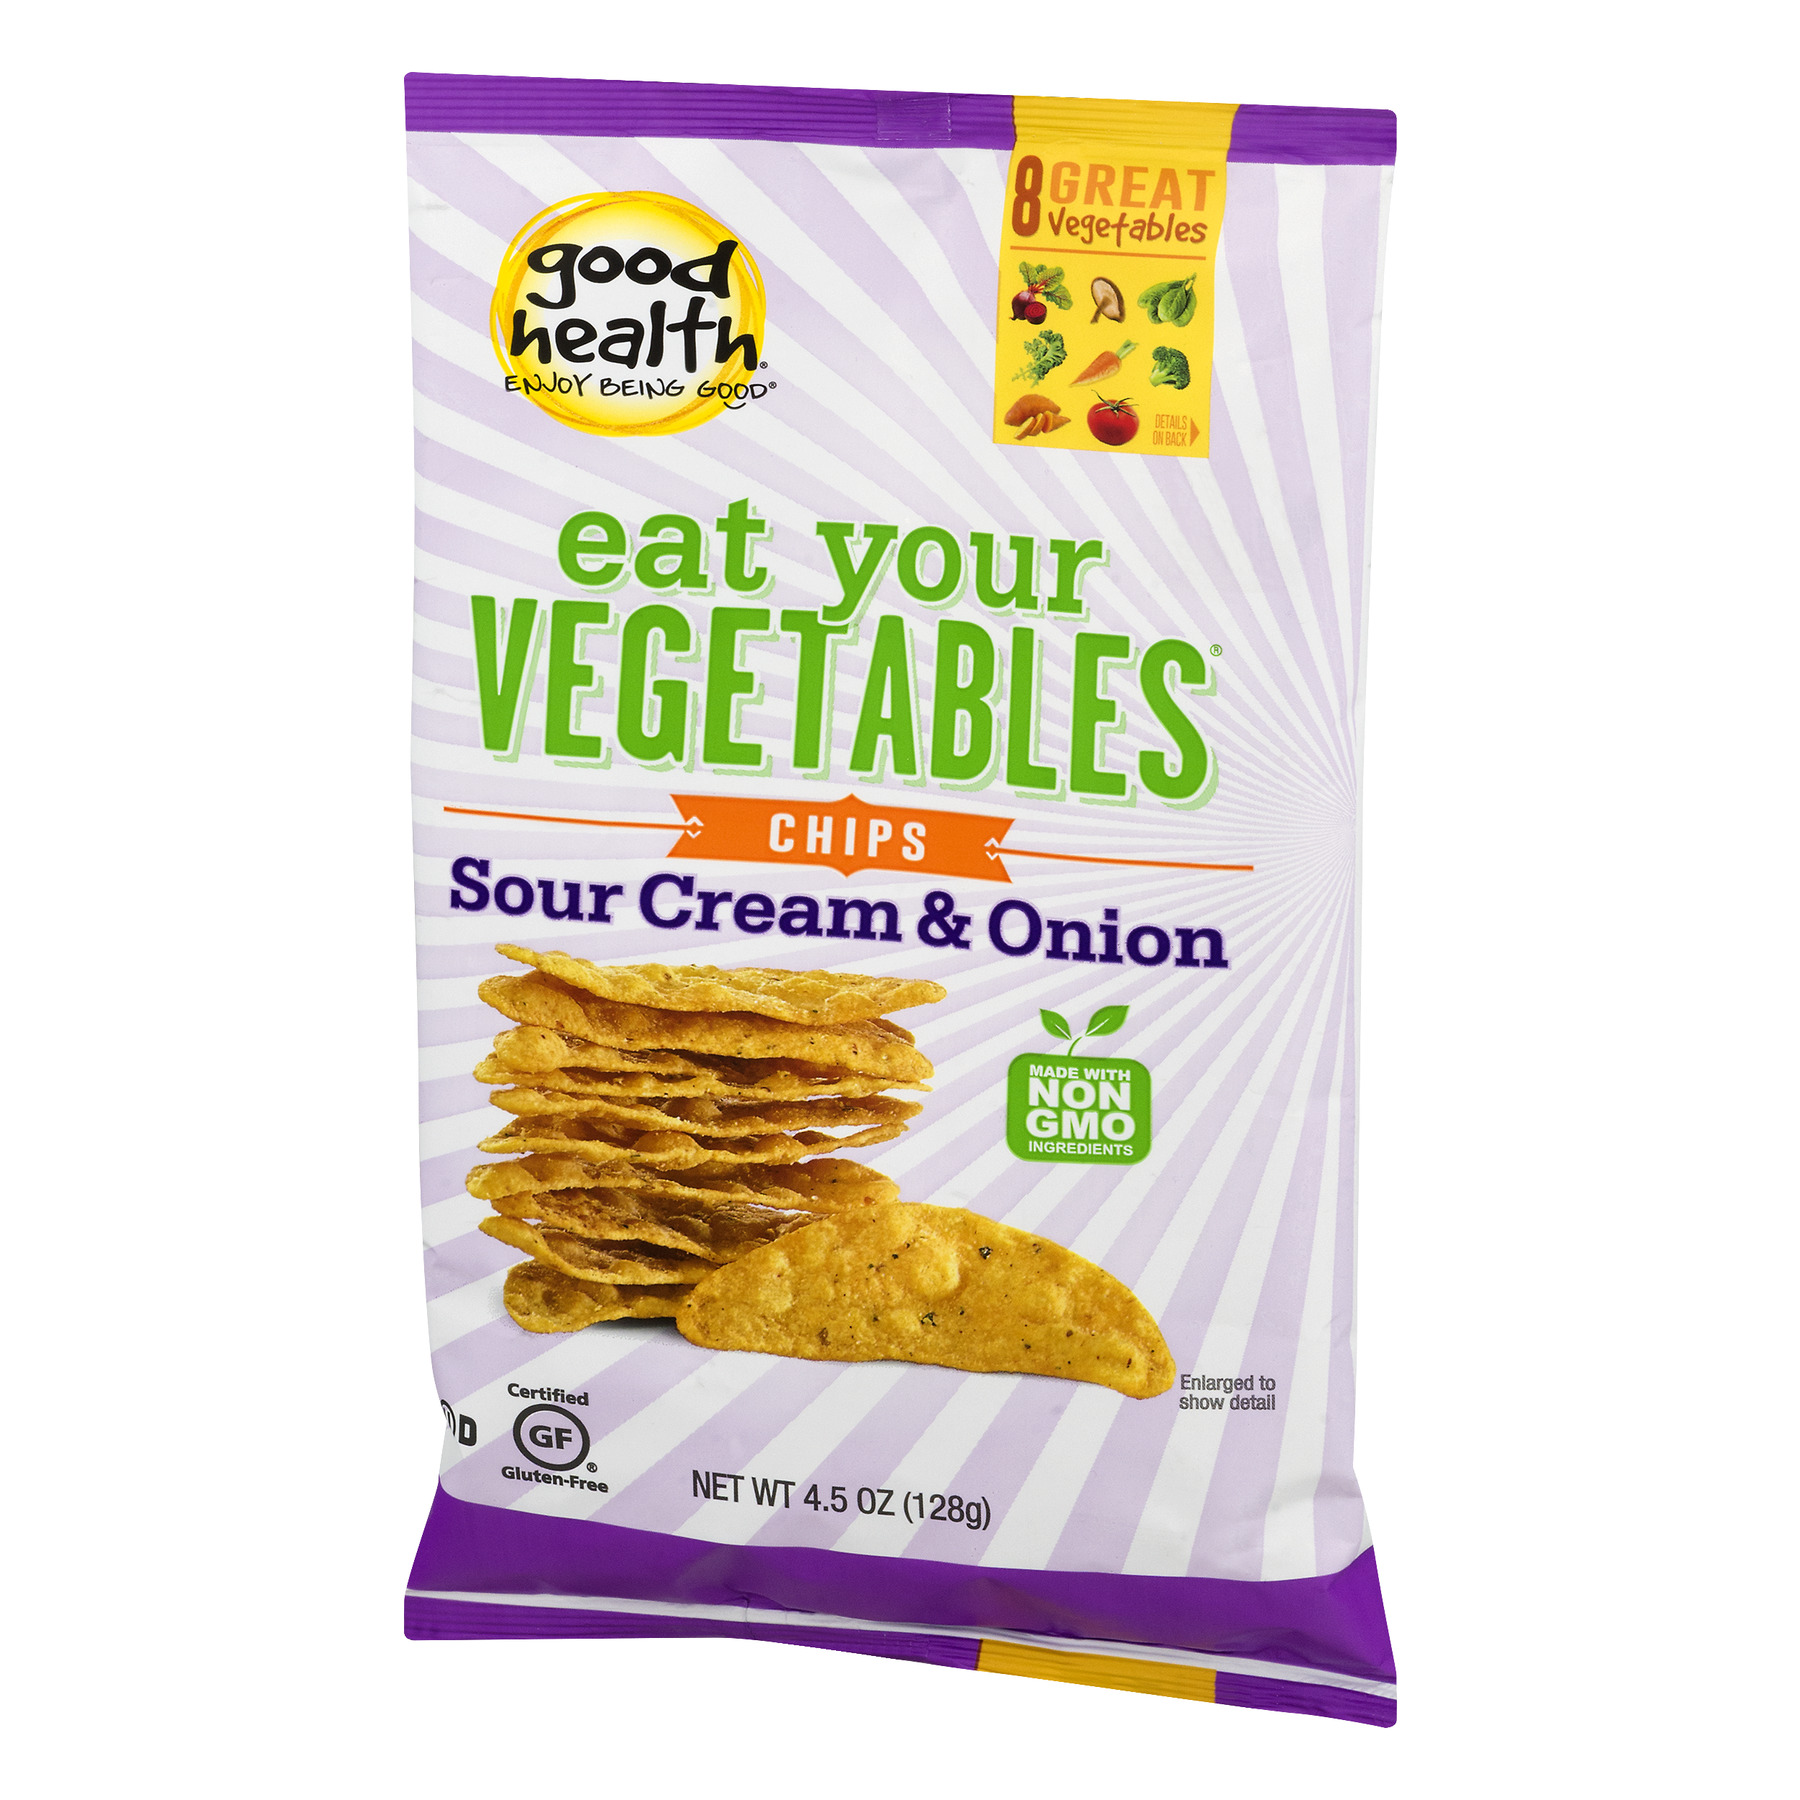 Snikiddy Sour Cream & Onion Veggie Chips, 4.5 Oz. - image 3 of 6